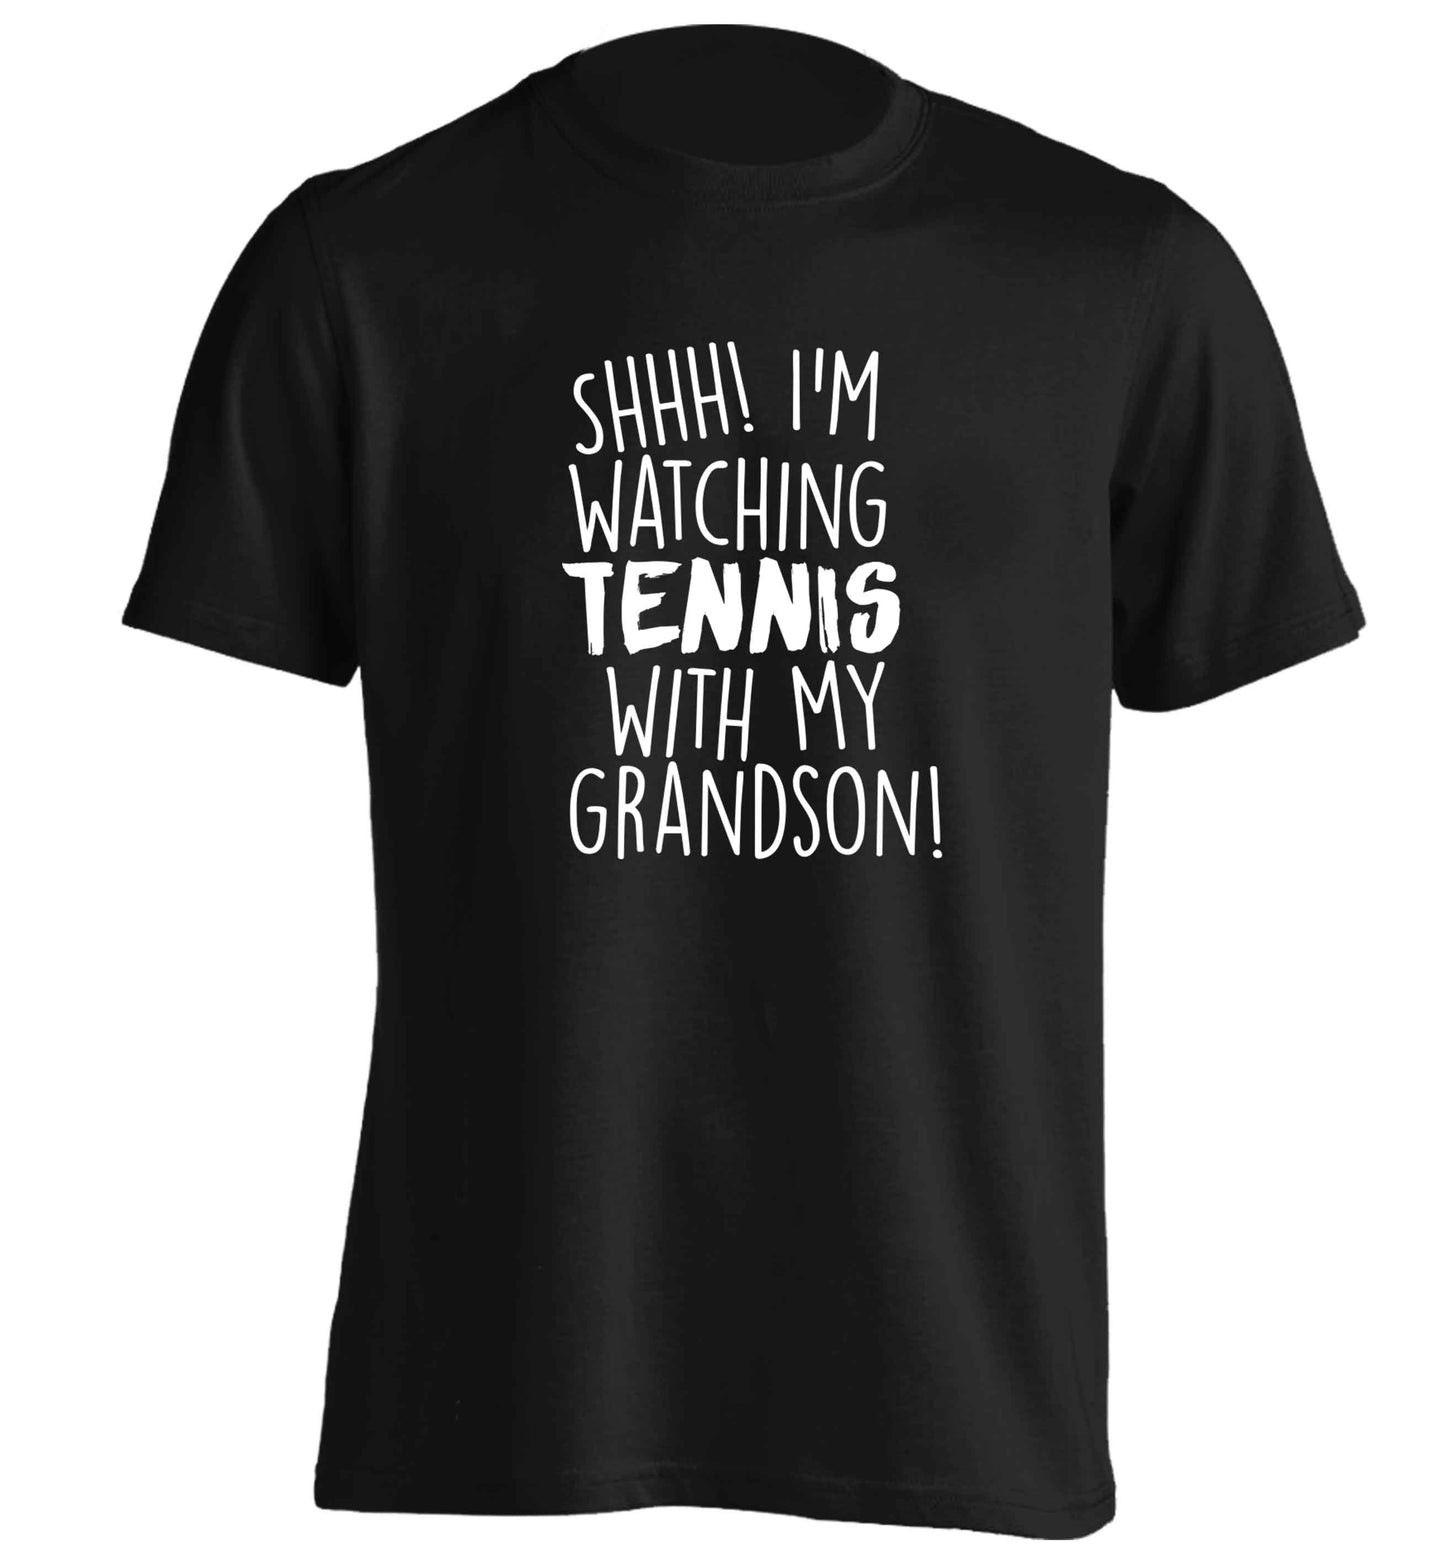 Shh! I'm watching tennis with my grandson! adults unisex black Tshirt 2XL